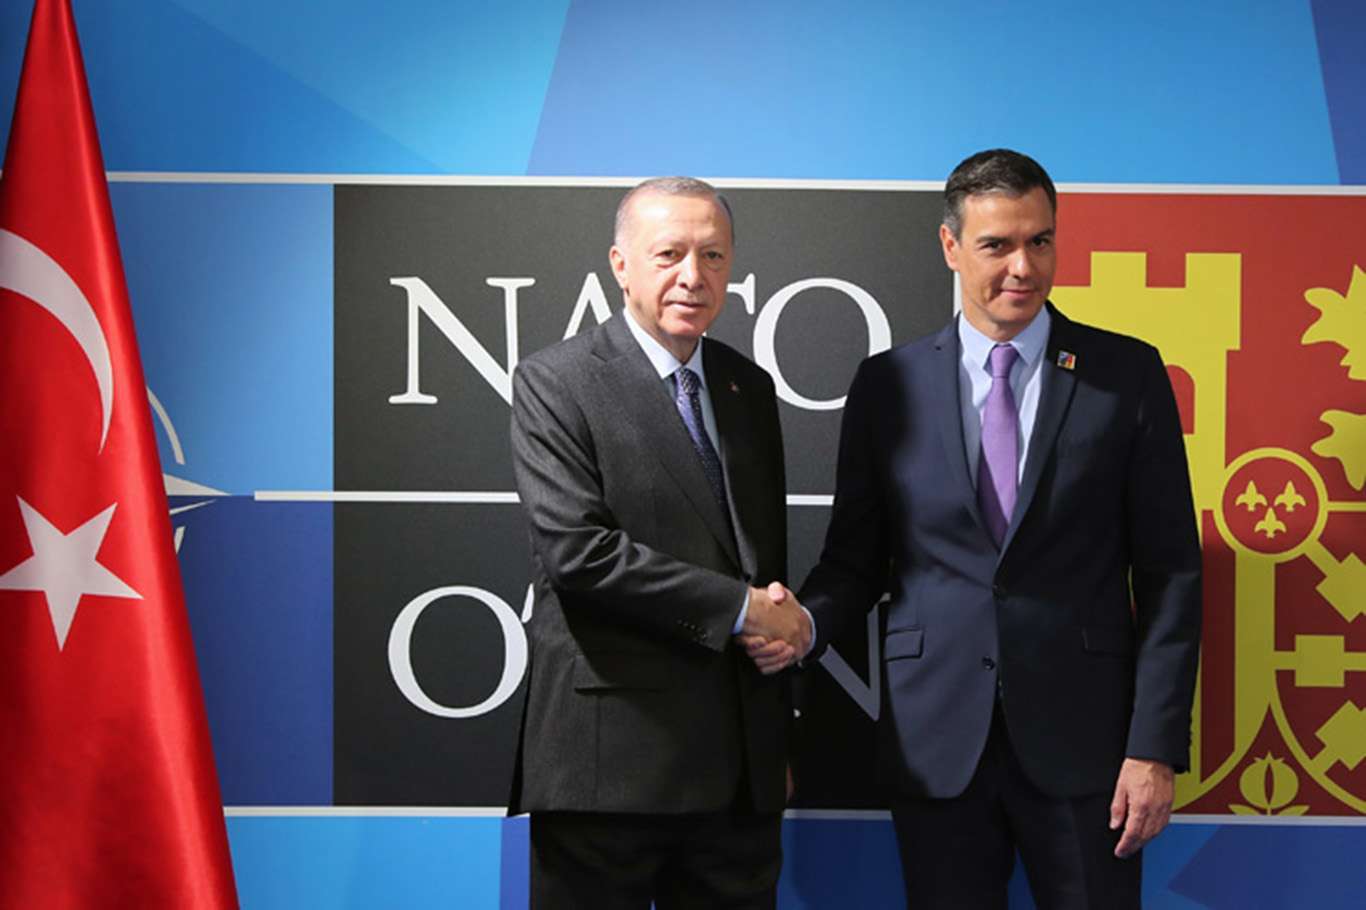 Erdoğan meets with Spainish Prime Minister Pedro Sánchez